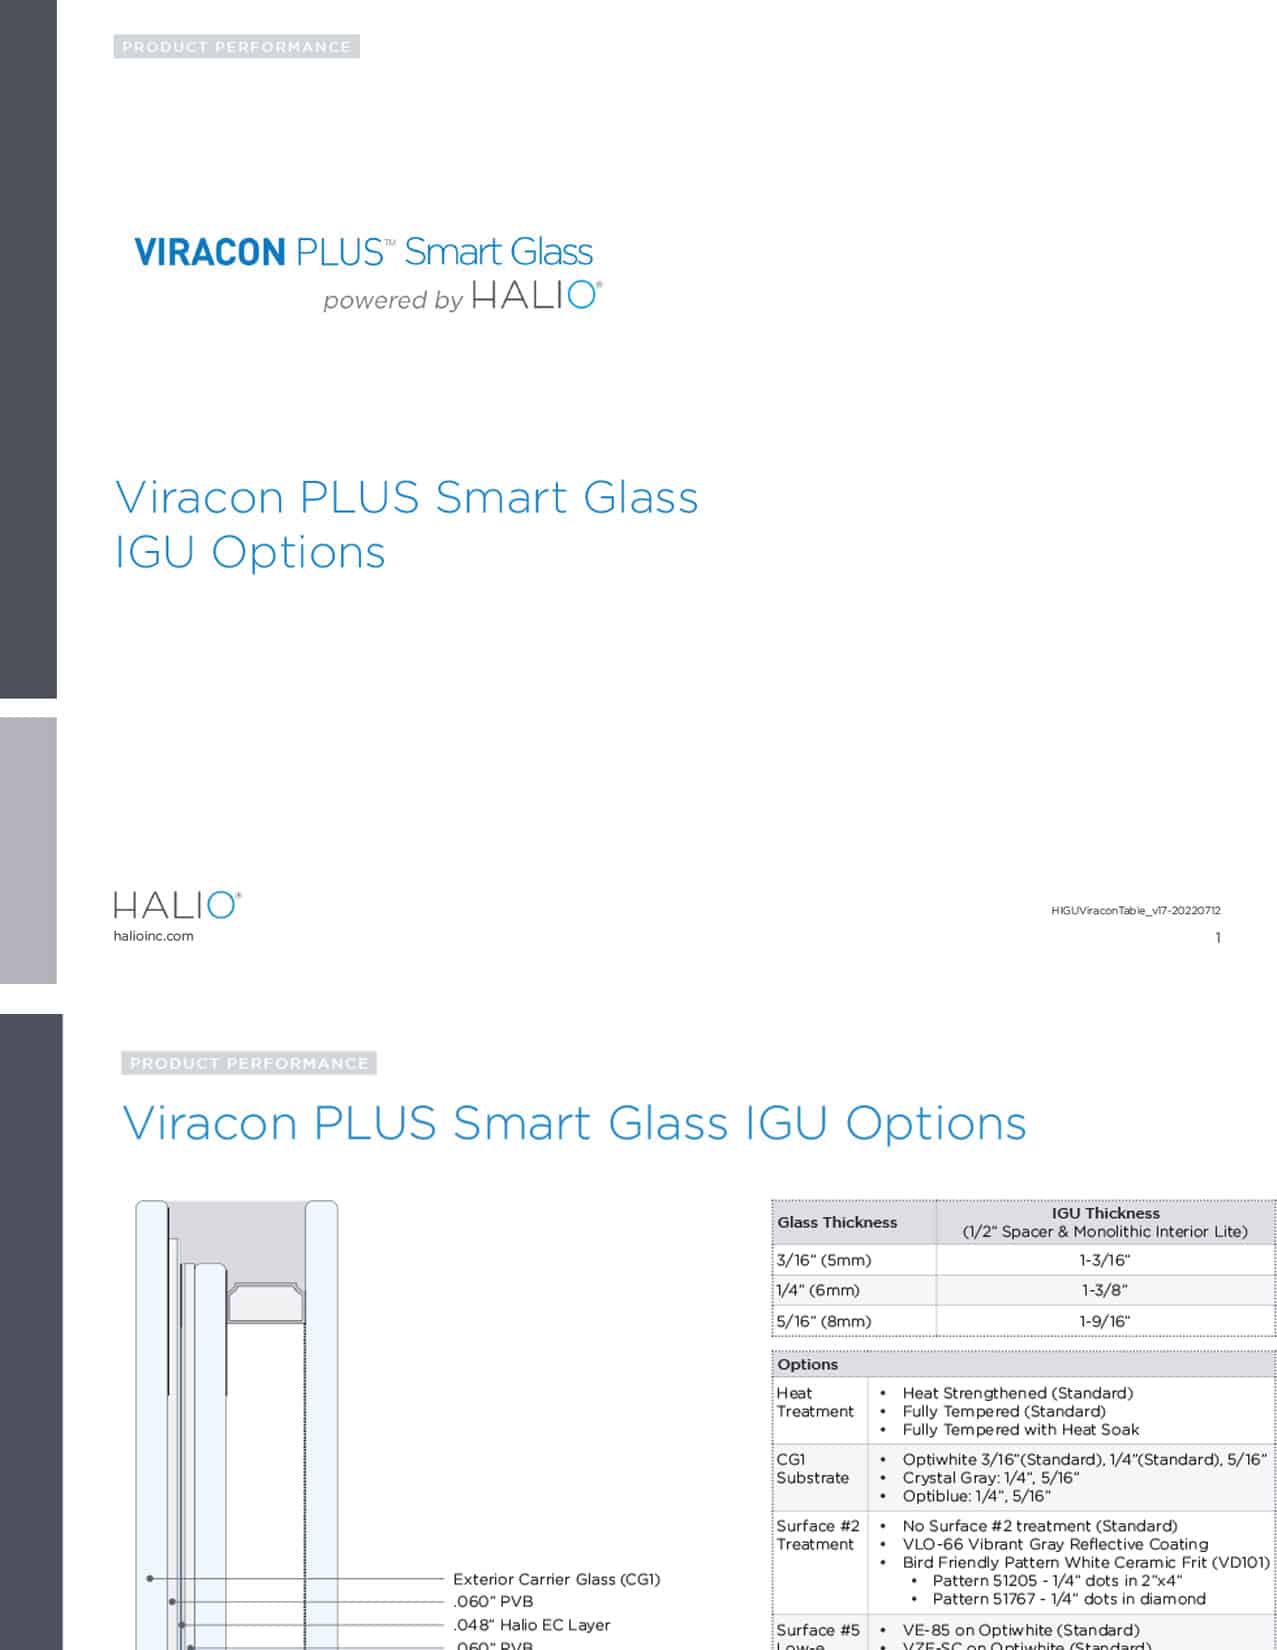 Viracon PLUS Smart Glass IGU Options